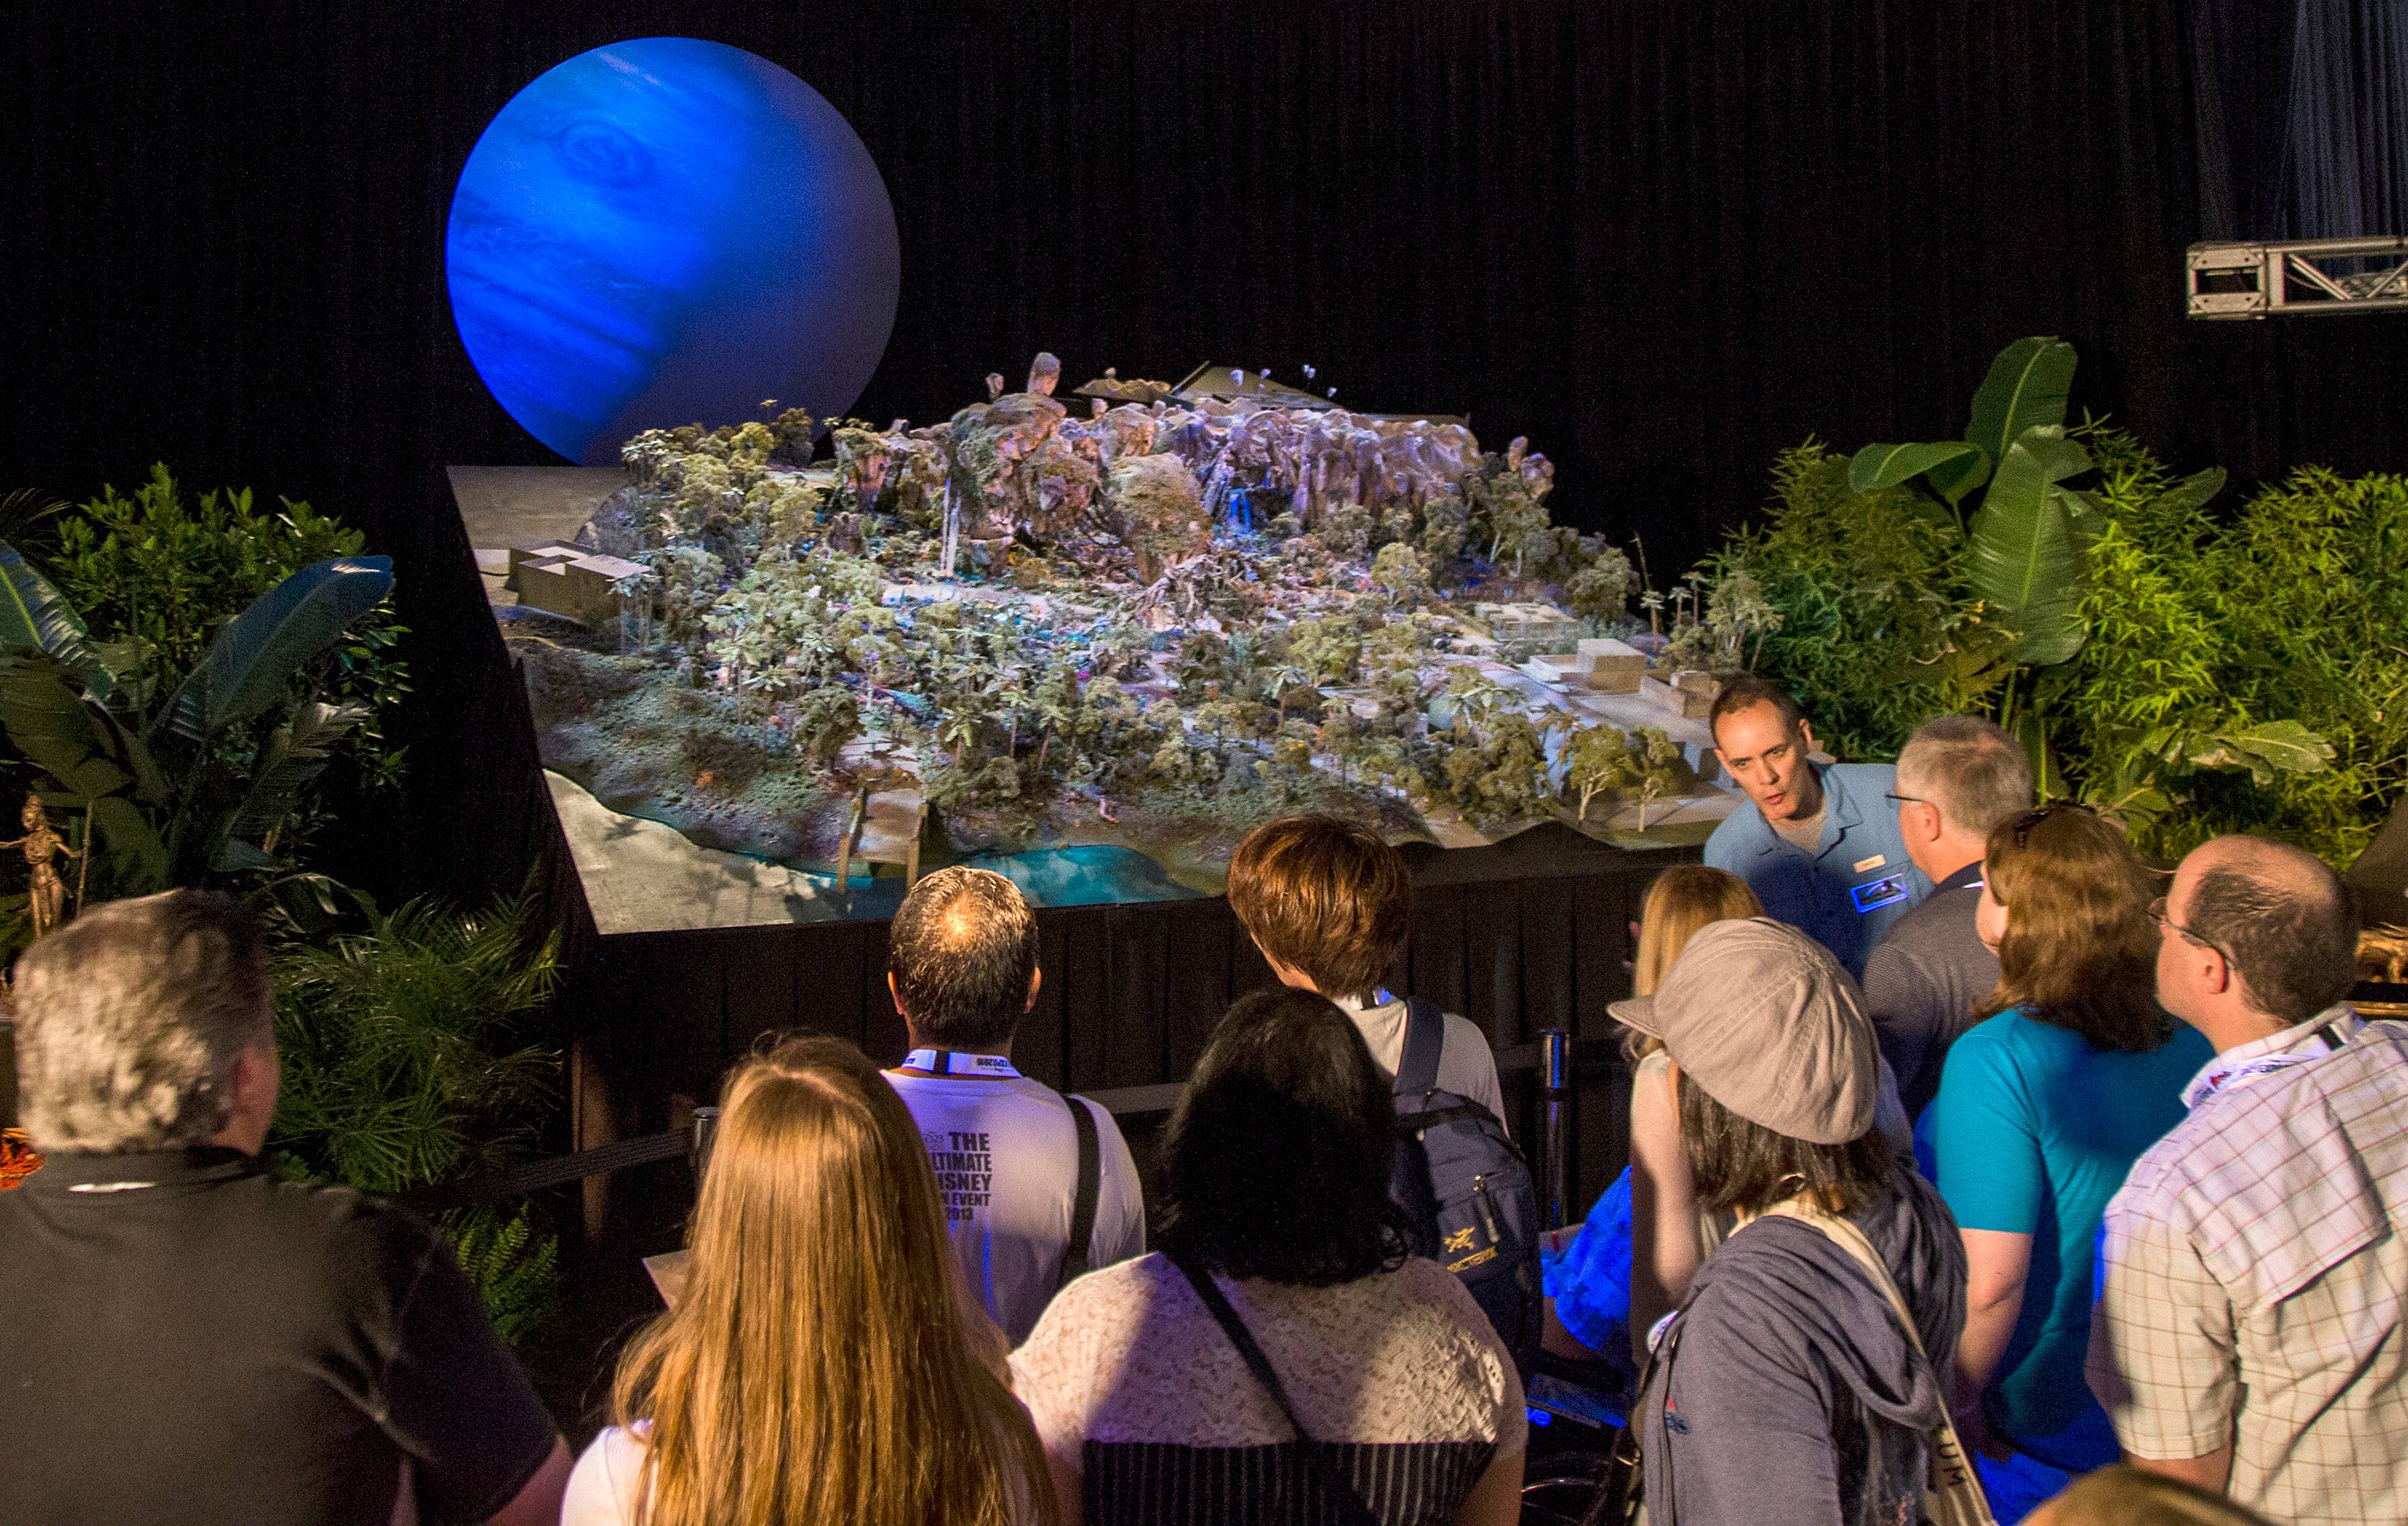 PHOTOS - Walt Disney Imagineering displays AVATAR project model at D23 EXPO